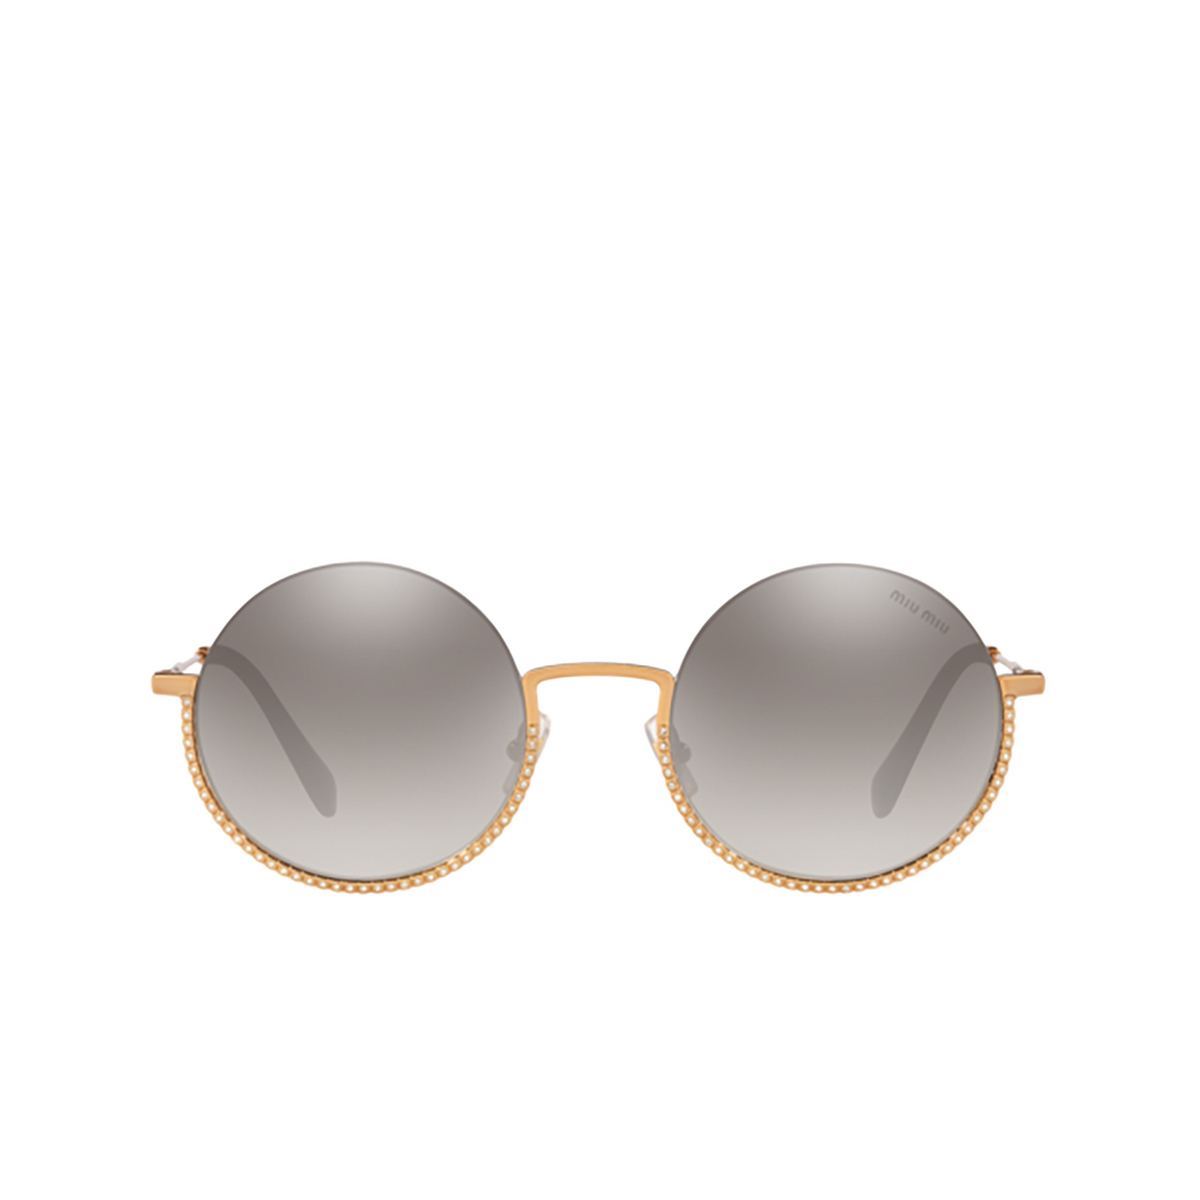 Miu Miu® Round Sunglasses: MU 69US color 7OE5O0 Antique Gold - front view